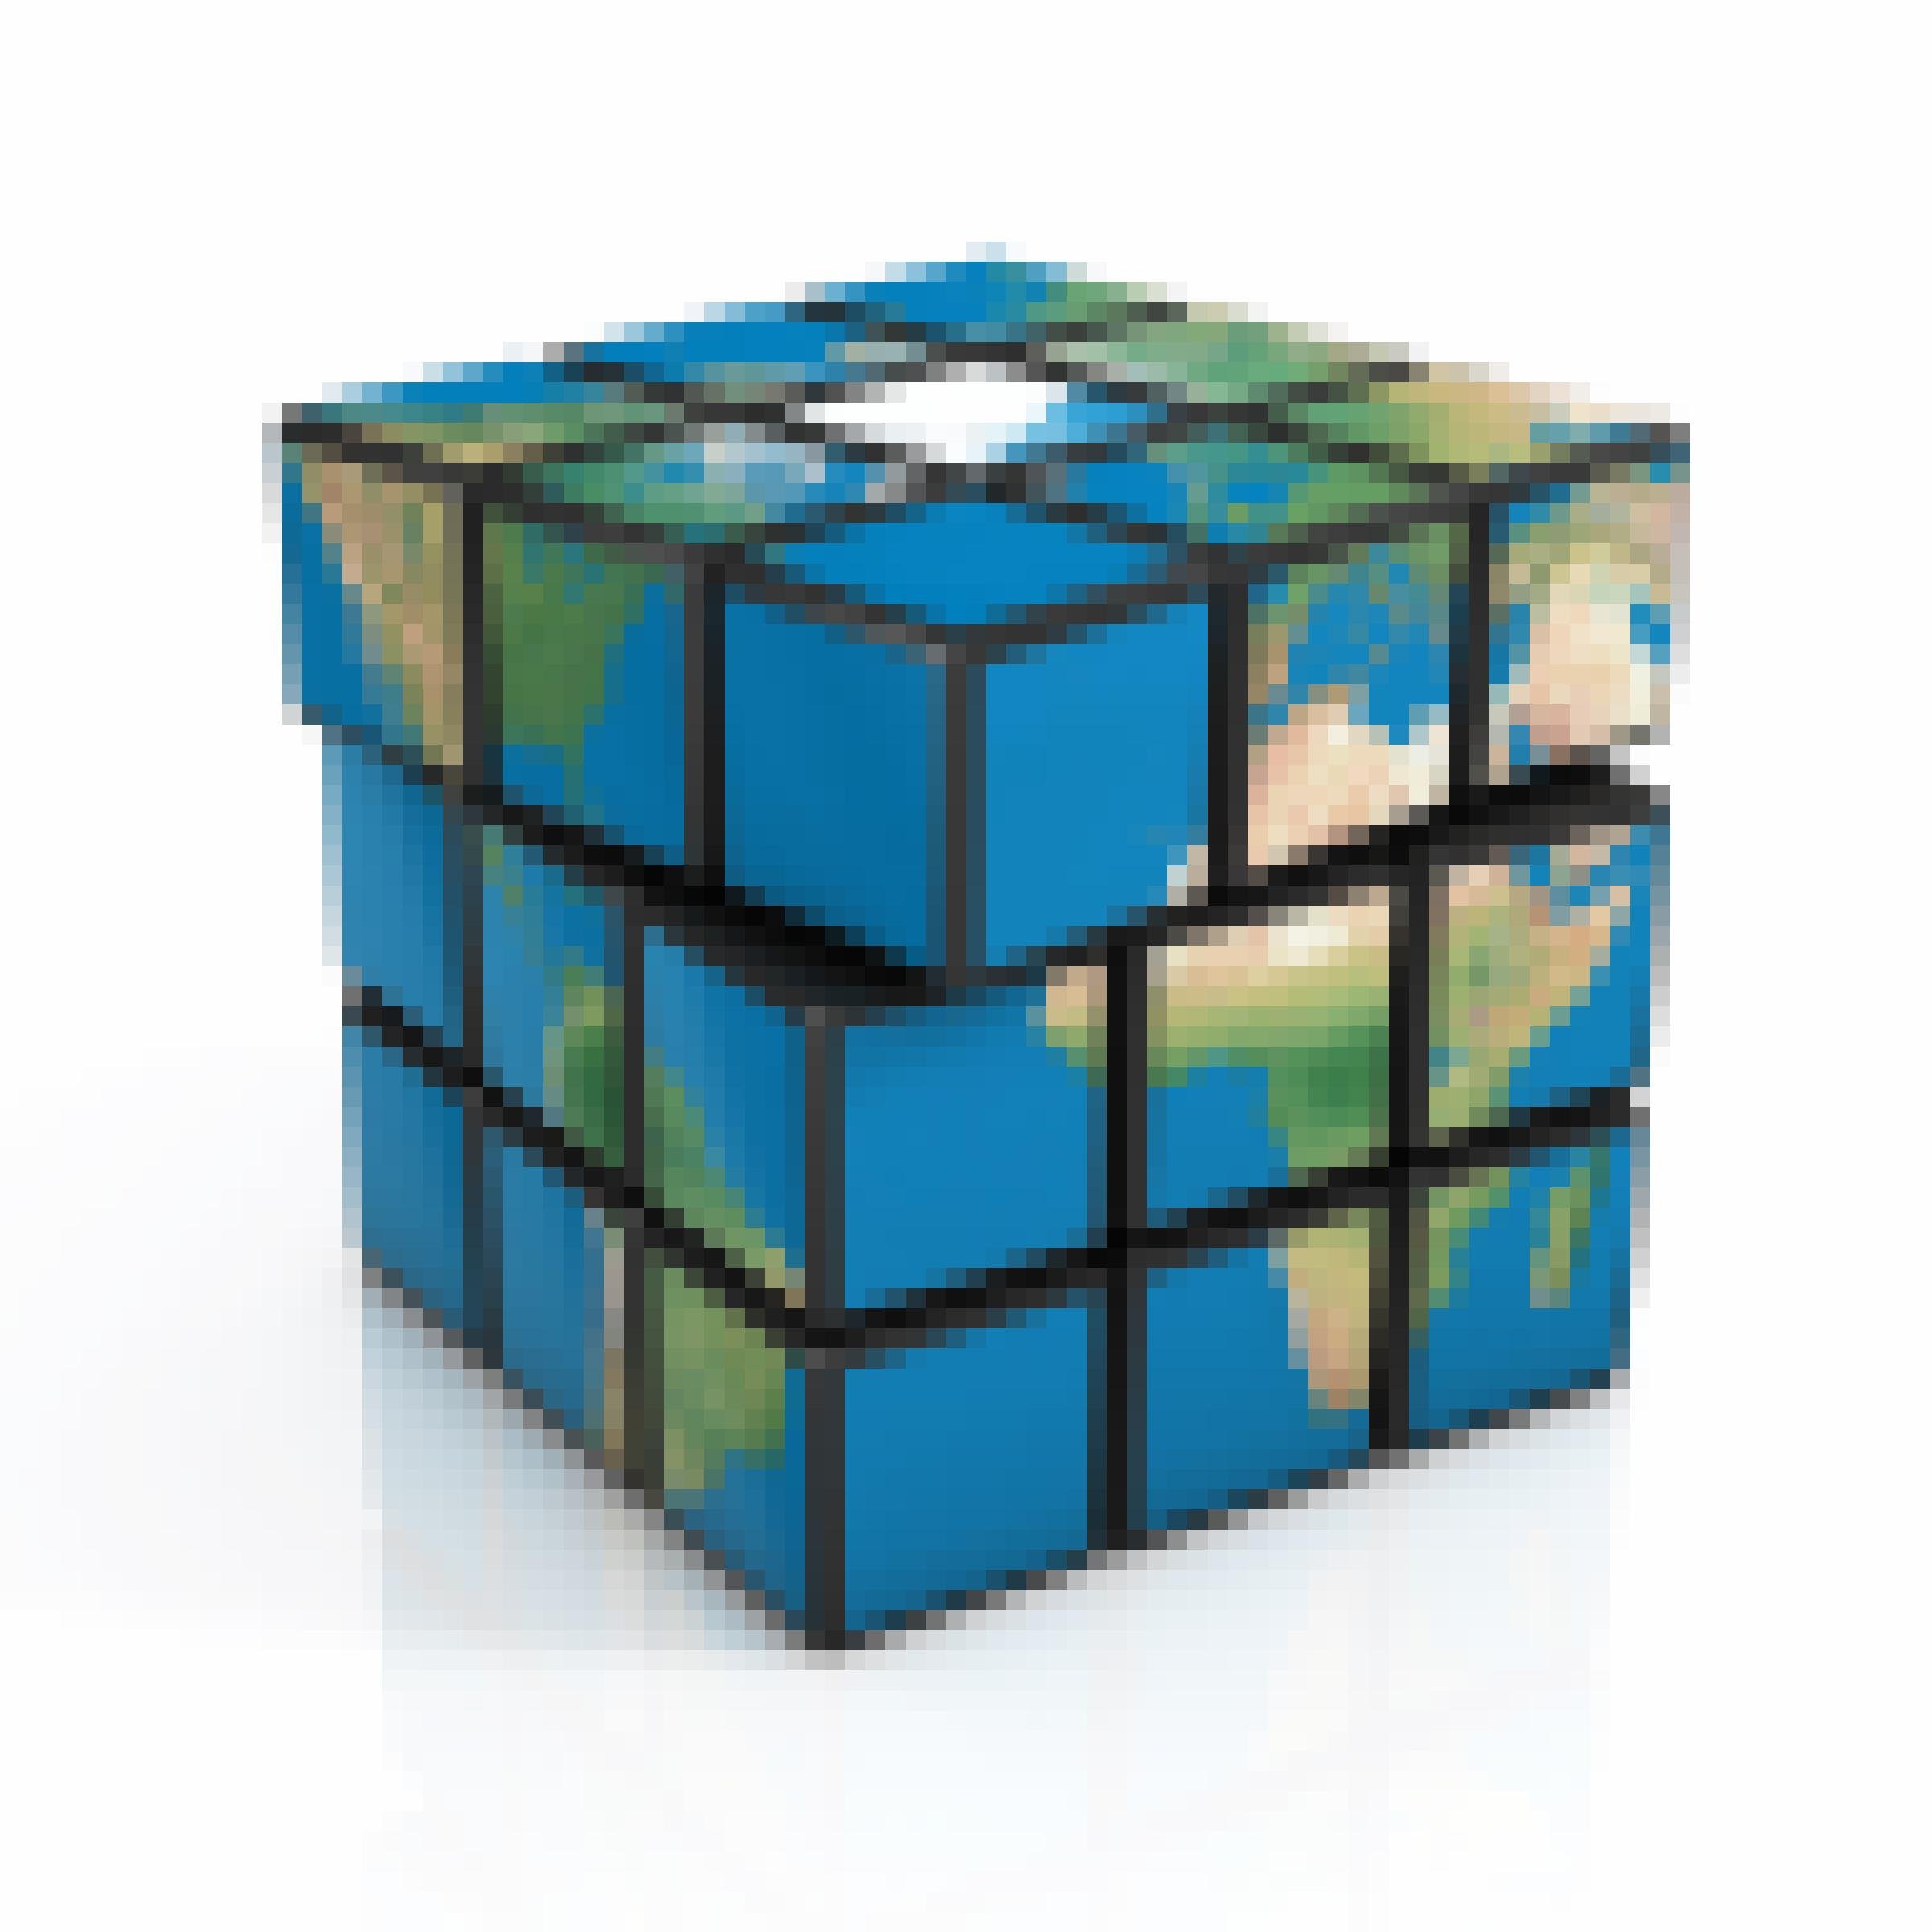 Die Erde ist als Rubik's Cube dargestellt.